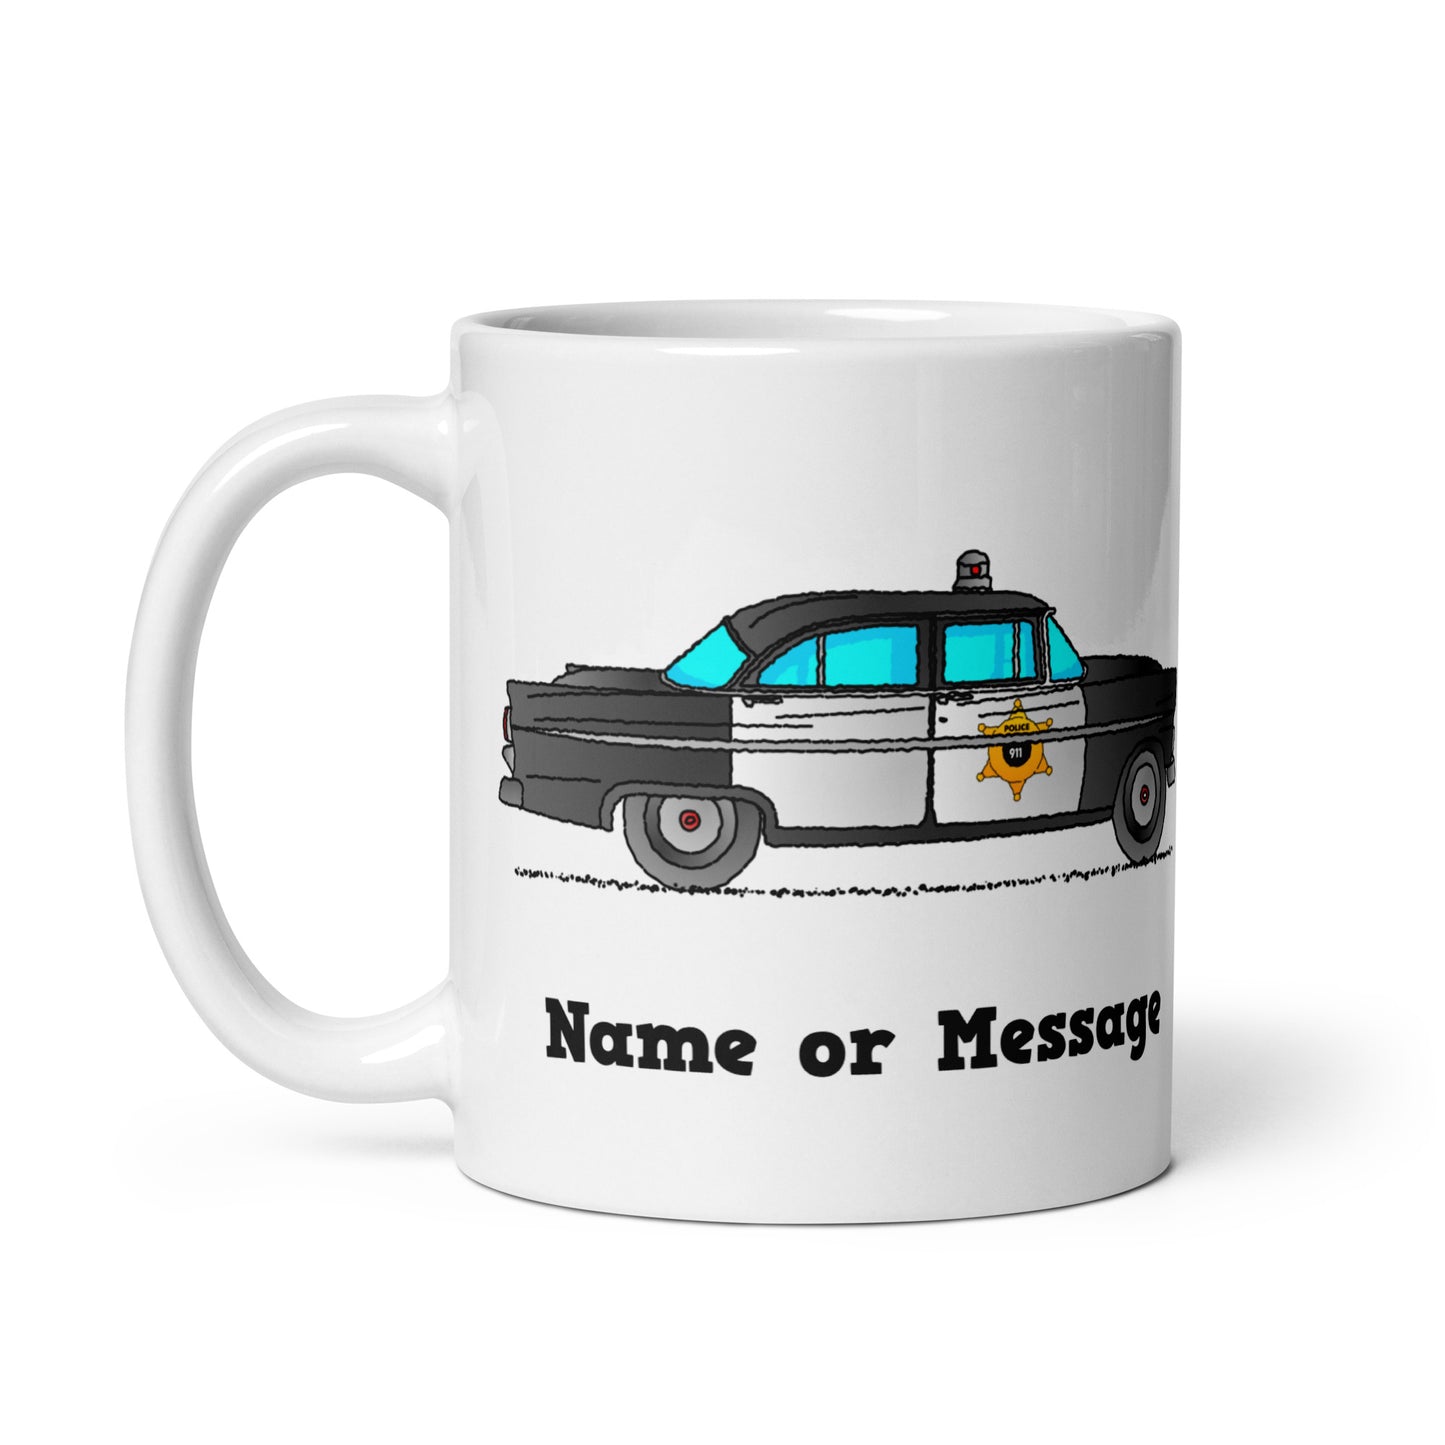 Personalized Classic 50s Police Patrol Car Mug